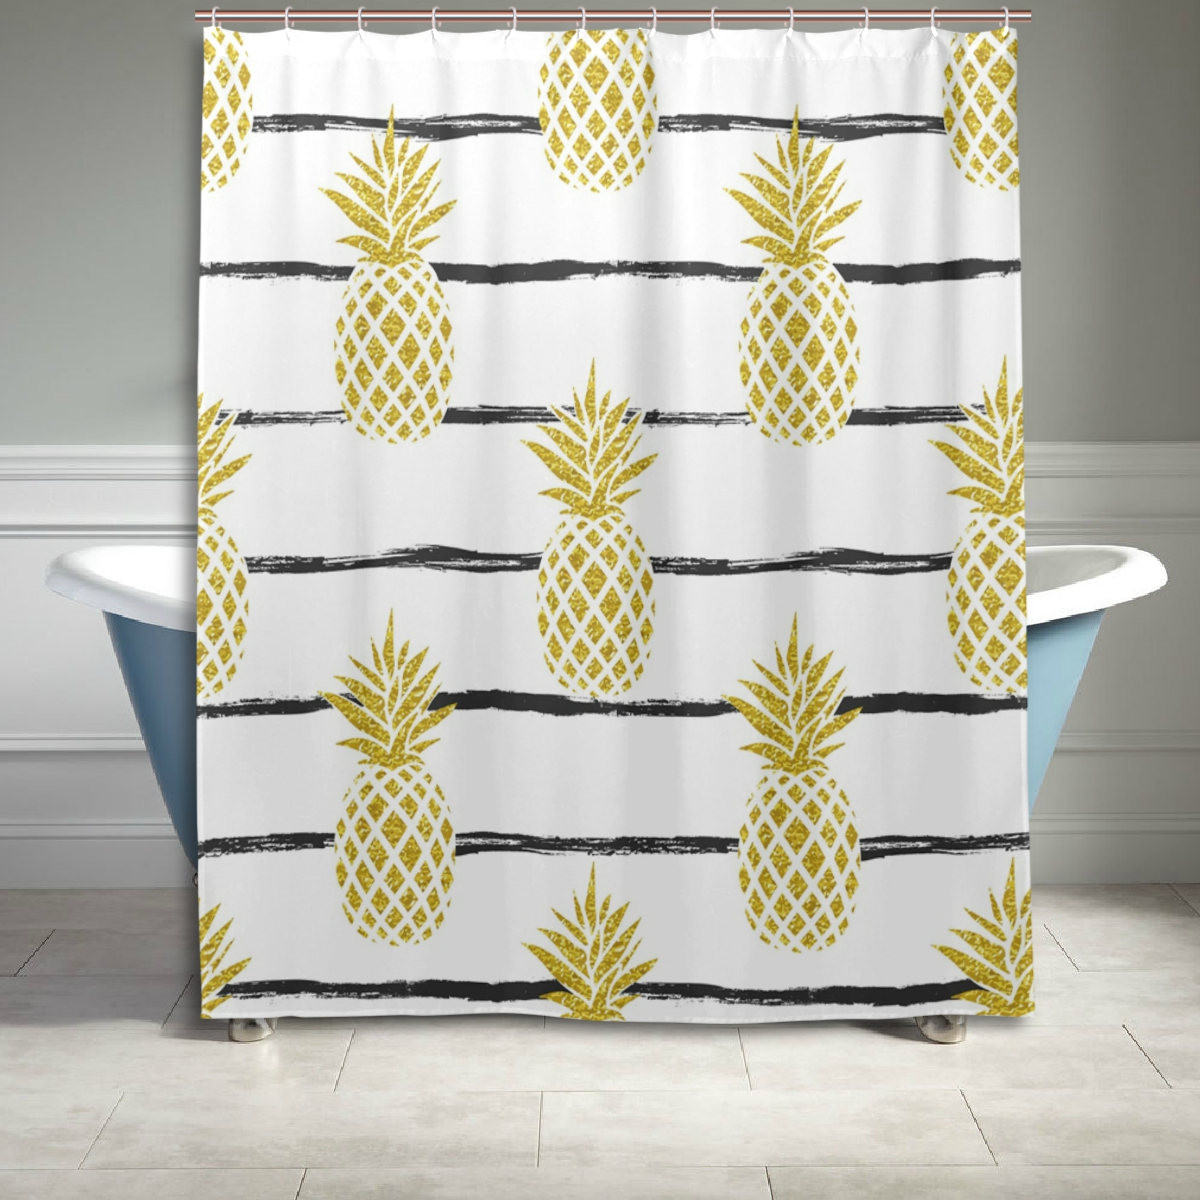 Pineapple Bathroom Decor
 Gold Pineapple Stripe Pattern Shower Curtain Bathroom Decor